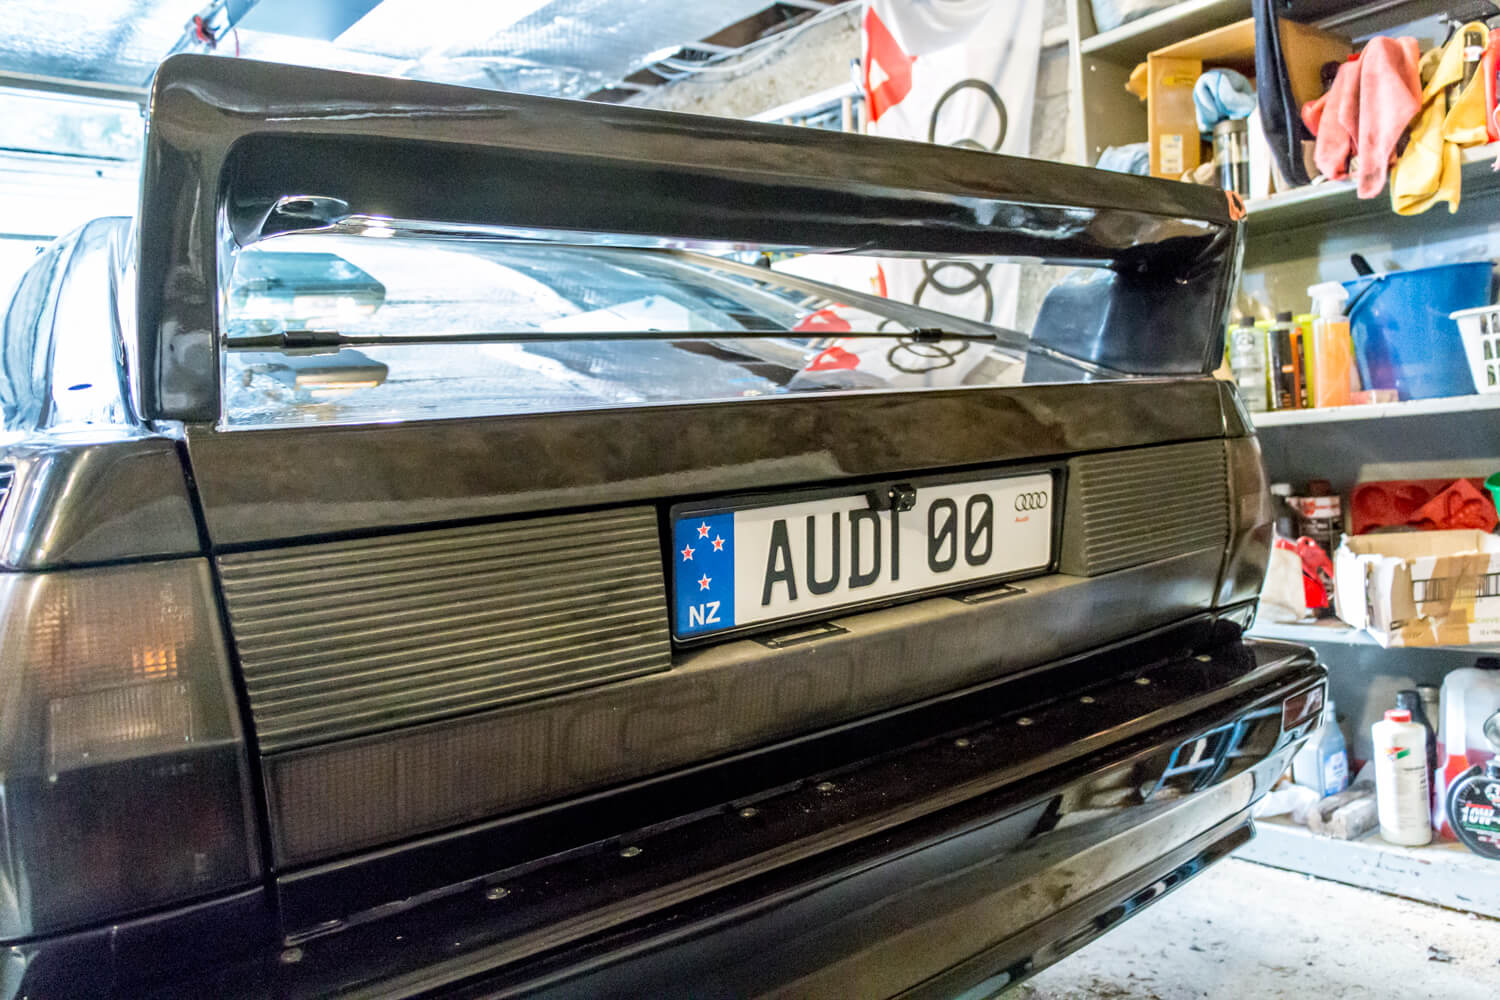 Robs-Audi-urquattro-Project-Rusty-4352